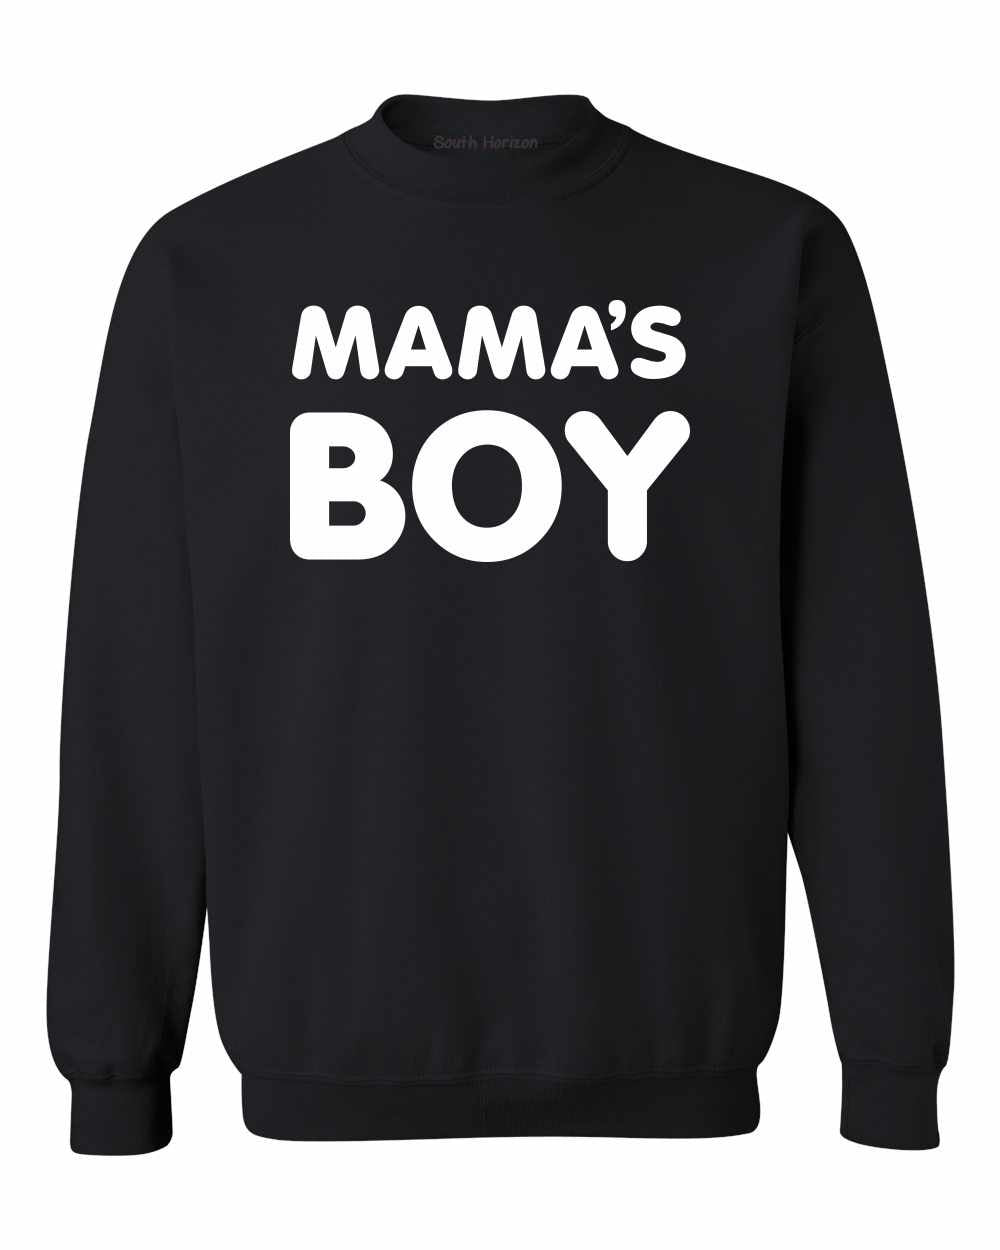 MAMA'S BOY on SweatShirt